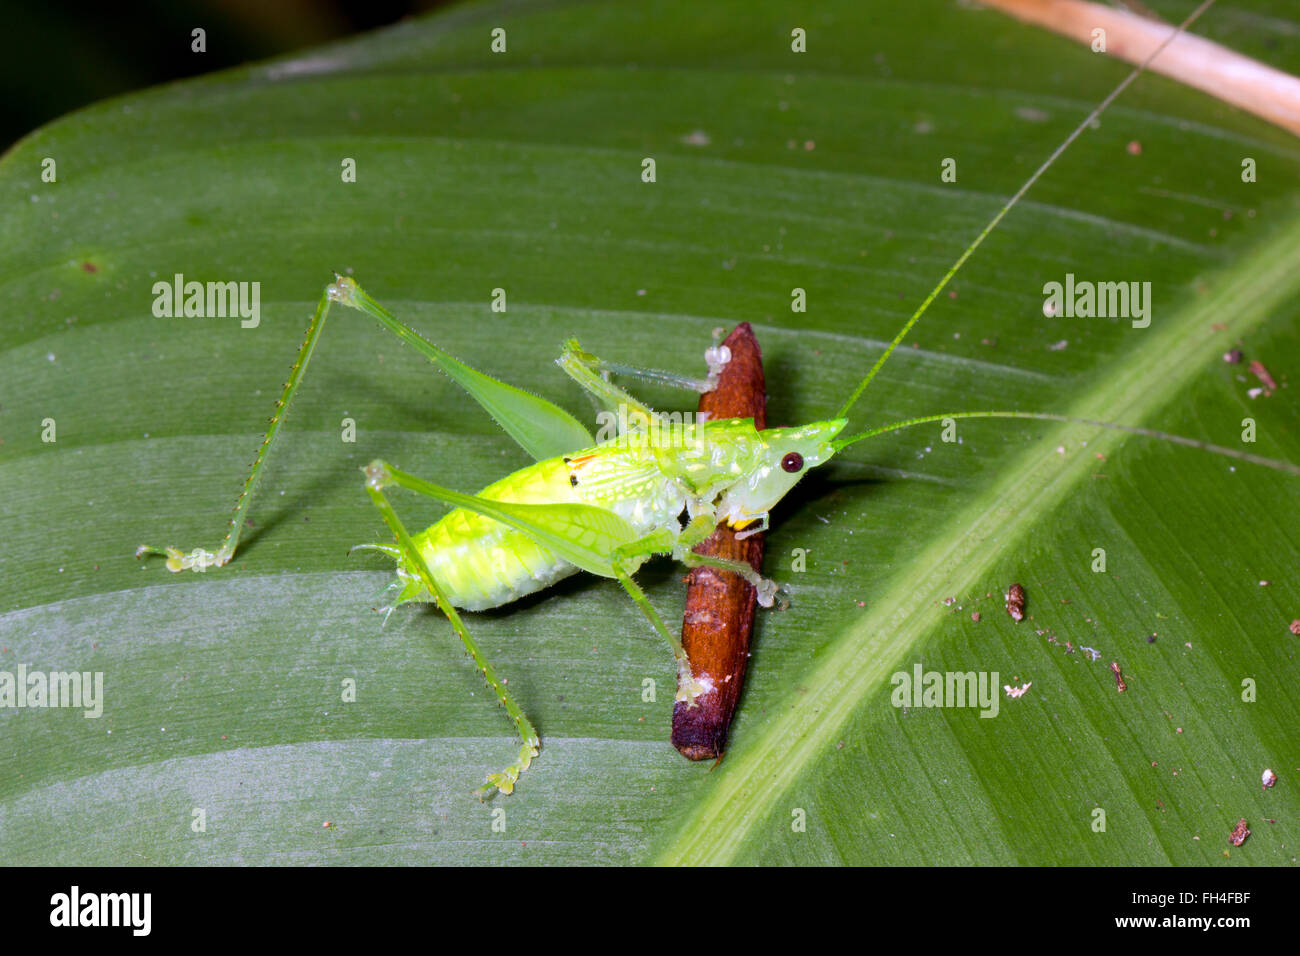 A juvenile conehead katydid (family Tettigoniidae) eating a piece of fallen fruit on a rainforest leaf, Pastaza province,Ecuador Stock Photo